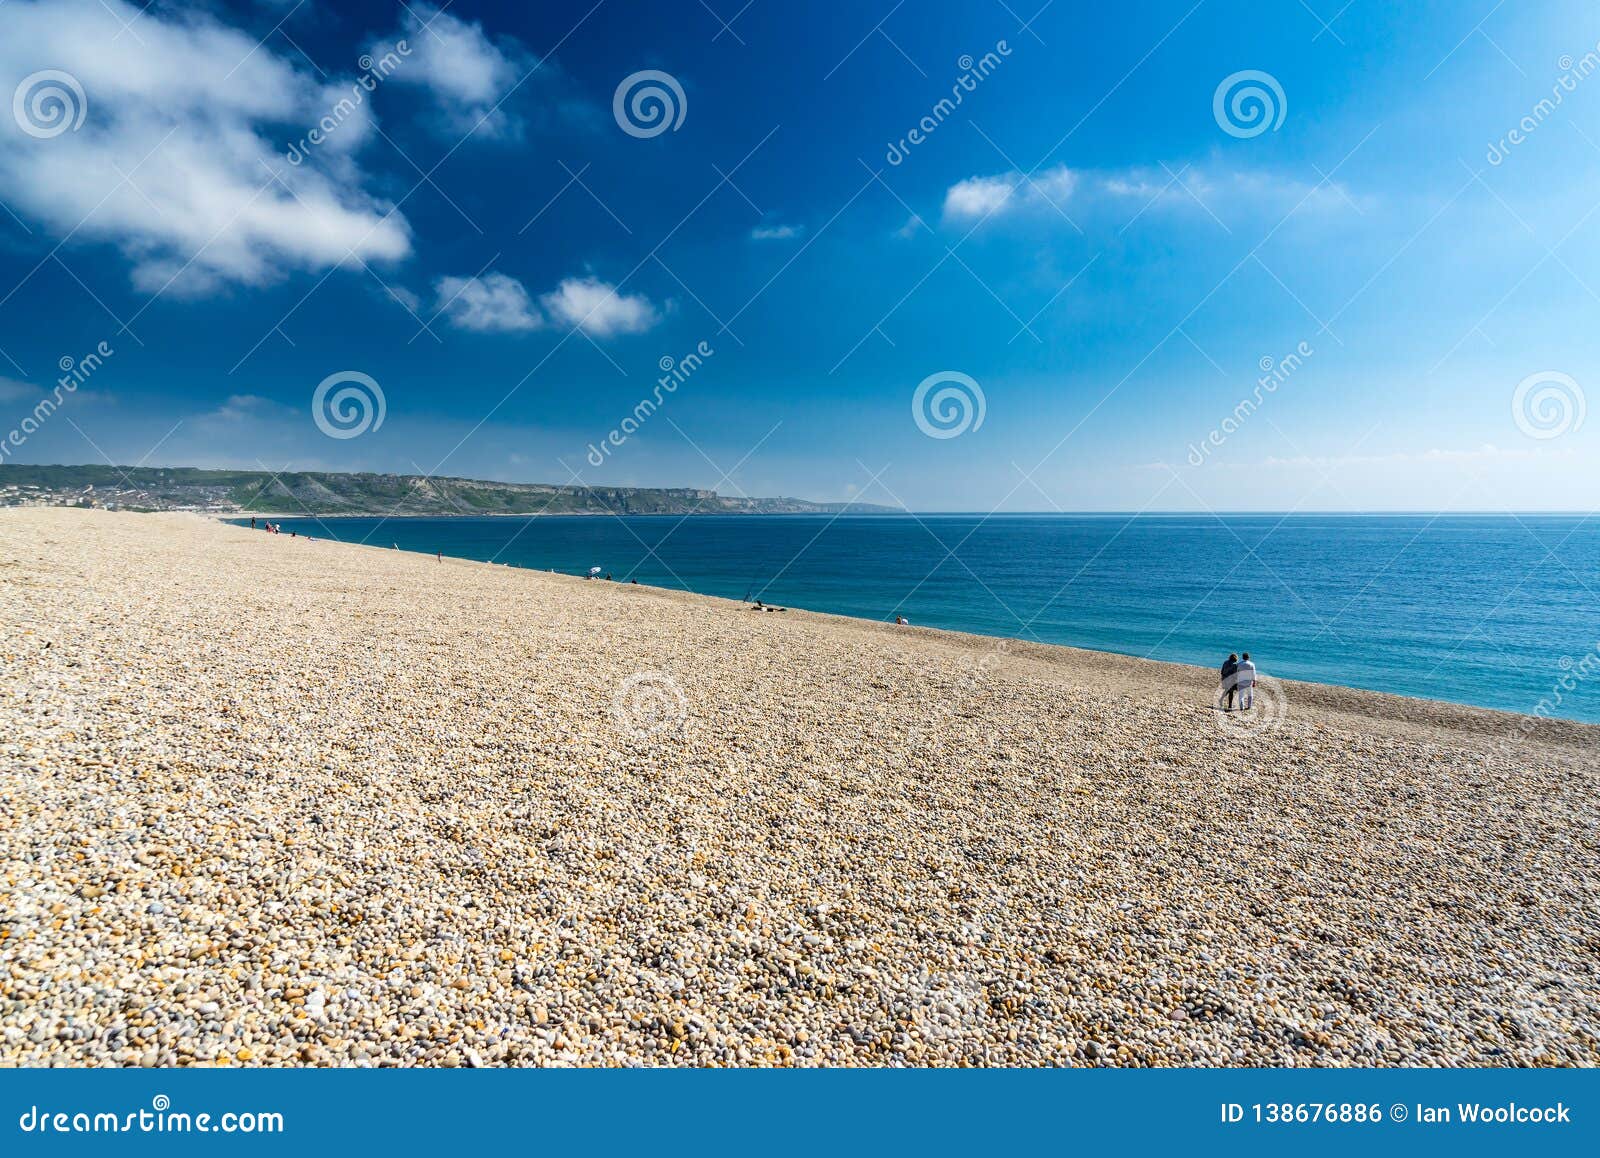 Chesil Beach  Portland, Dorset